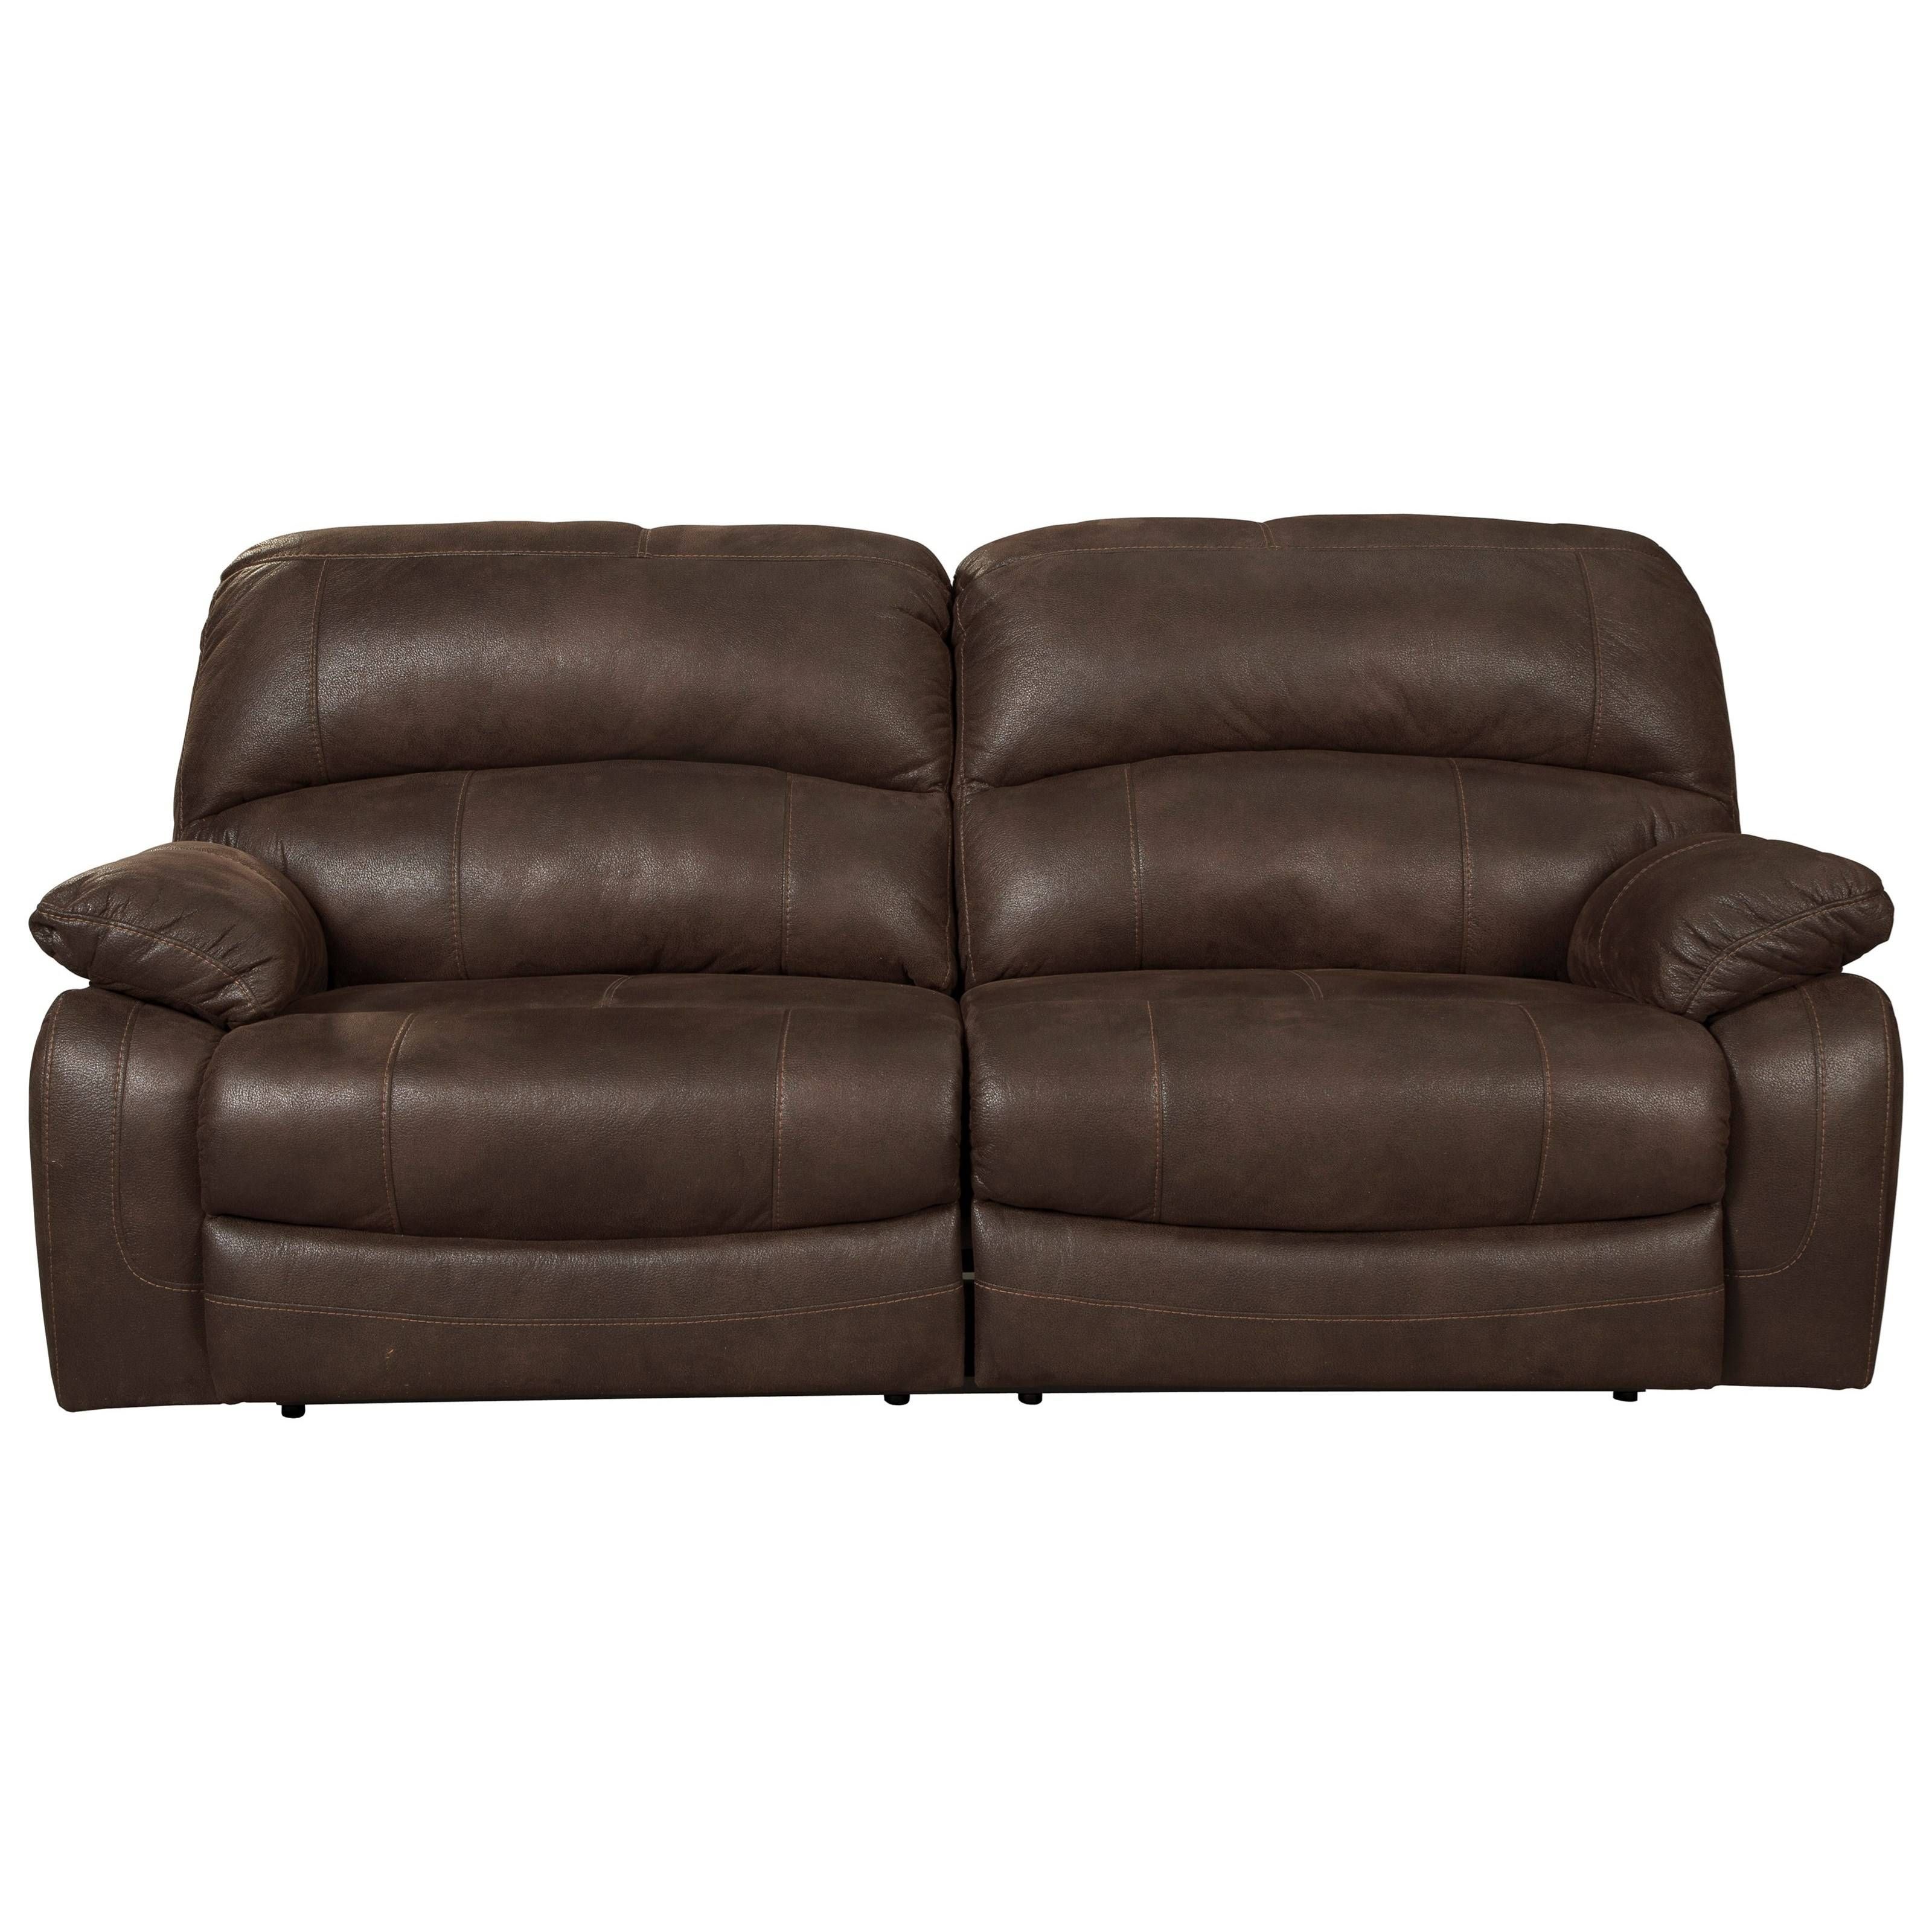 Signature Designashley Zavier 2 Seat Reclining Sofa In Brown Pertaining To 2 Seat Recliner Sofas (View 1 of 30)